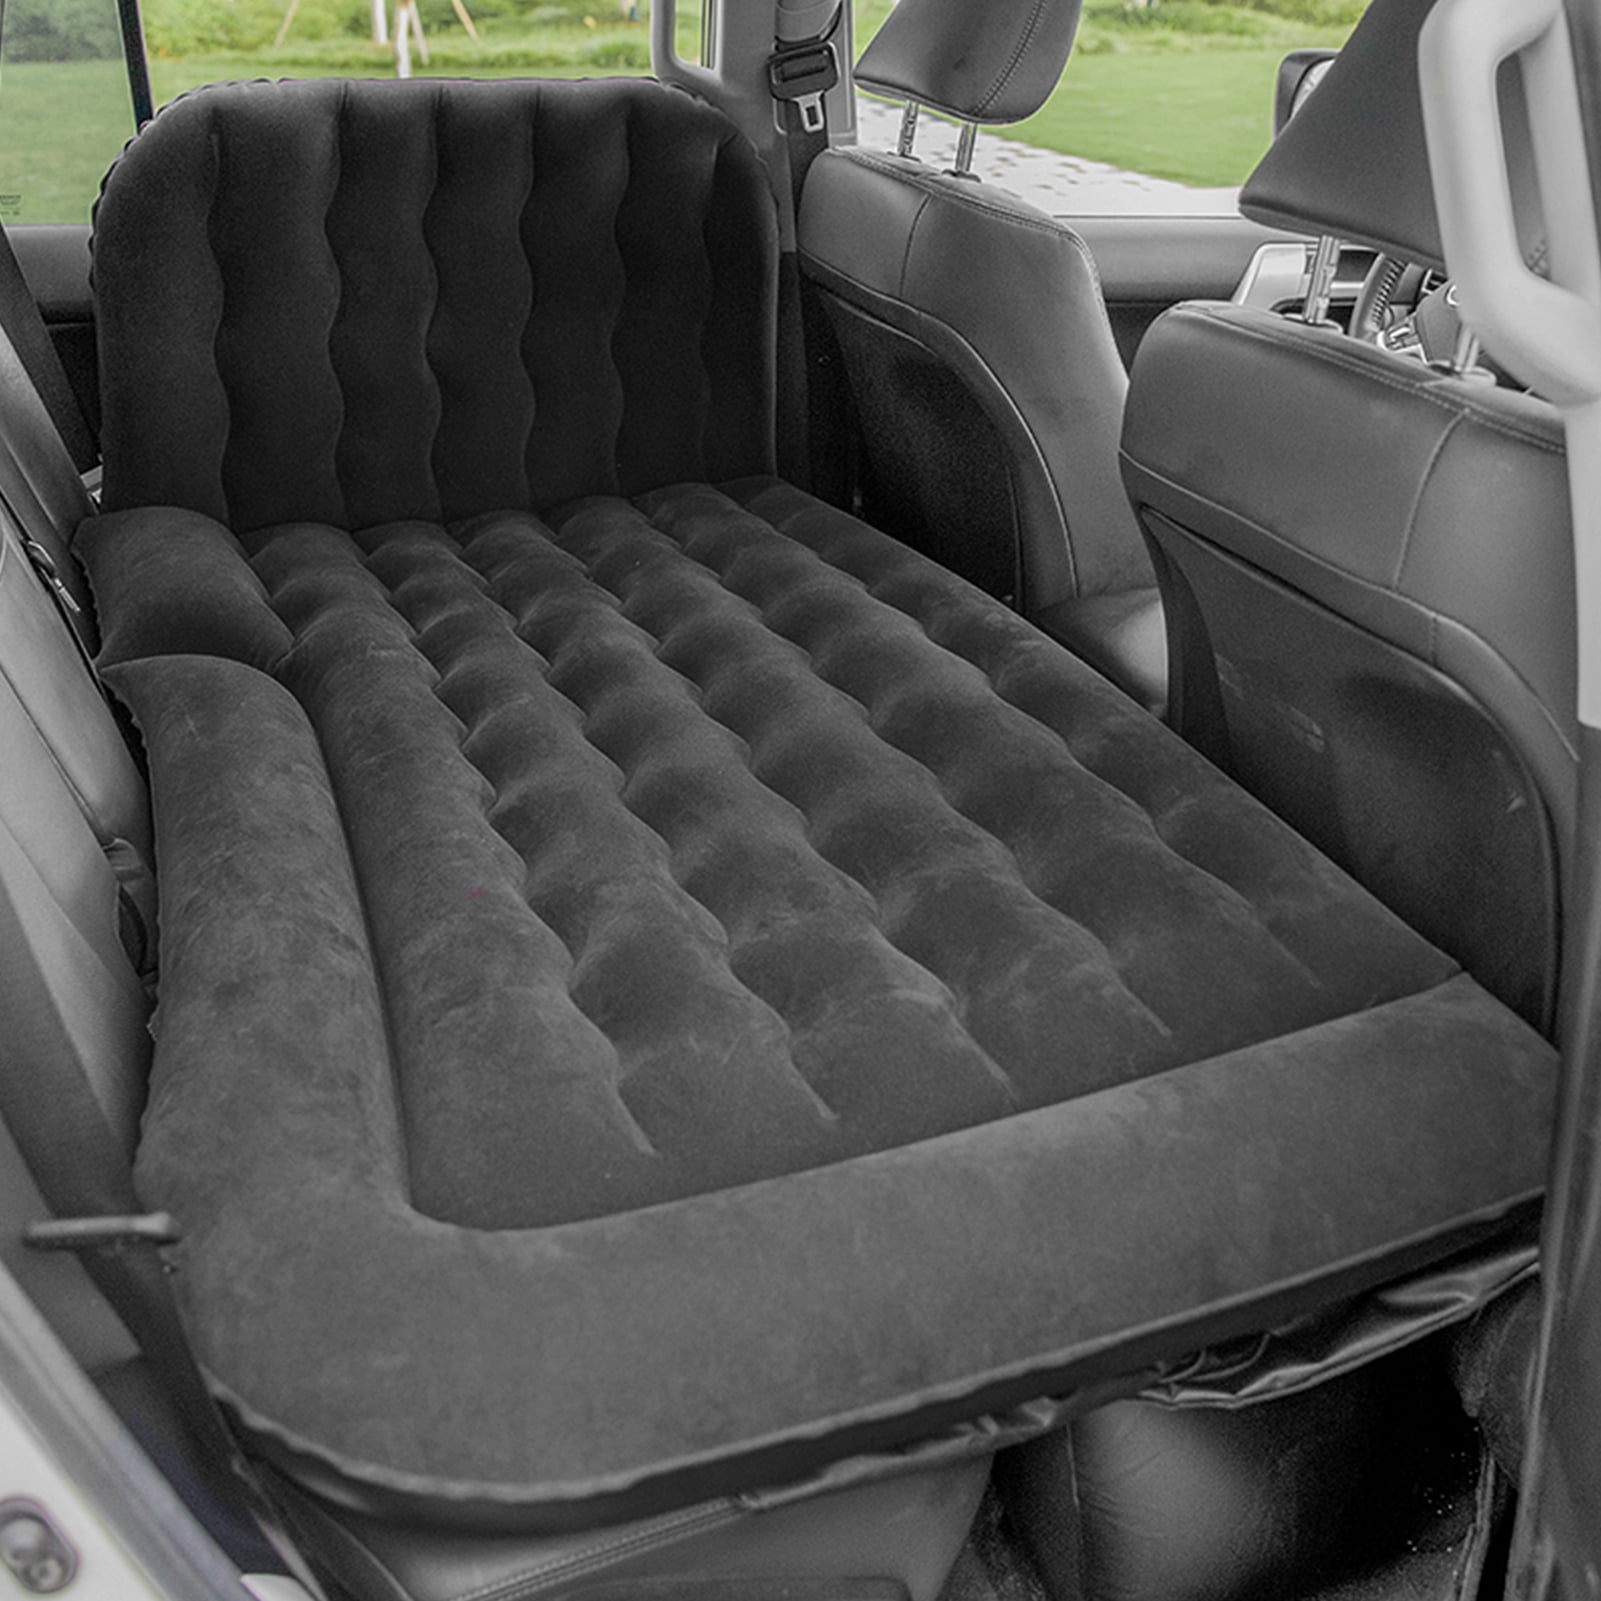 Details about   Car Air Inflatable Travel Mattress Bed Suv Car Mattress Car sleeping Pad Outdoor 